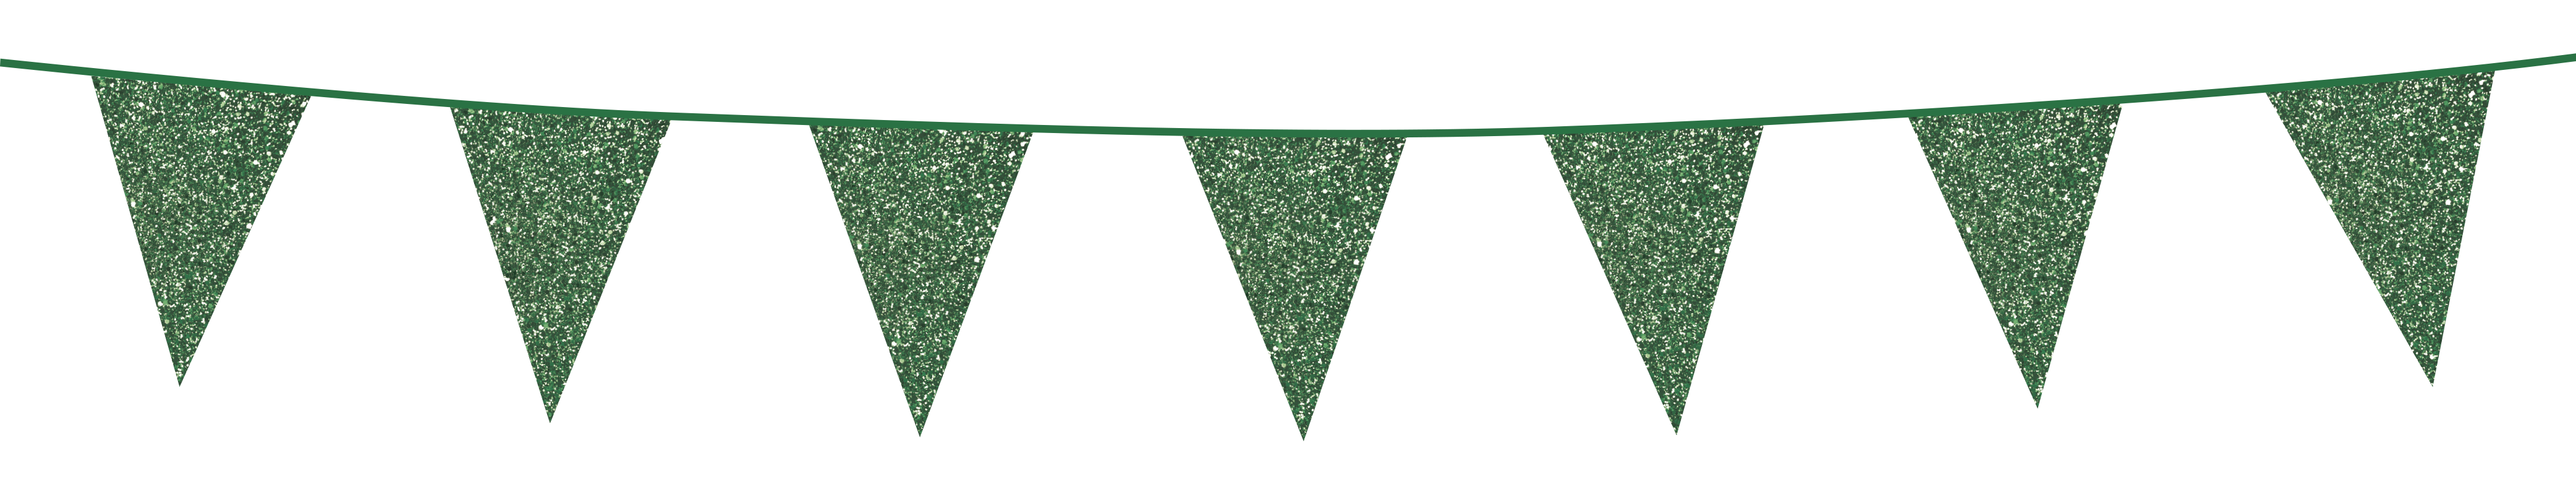 Bunting Glitter 6m. green - size flags 20x30cm per 6